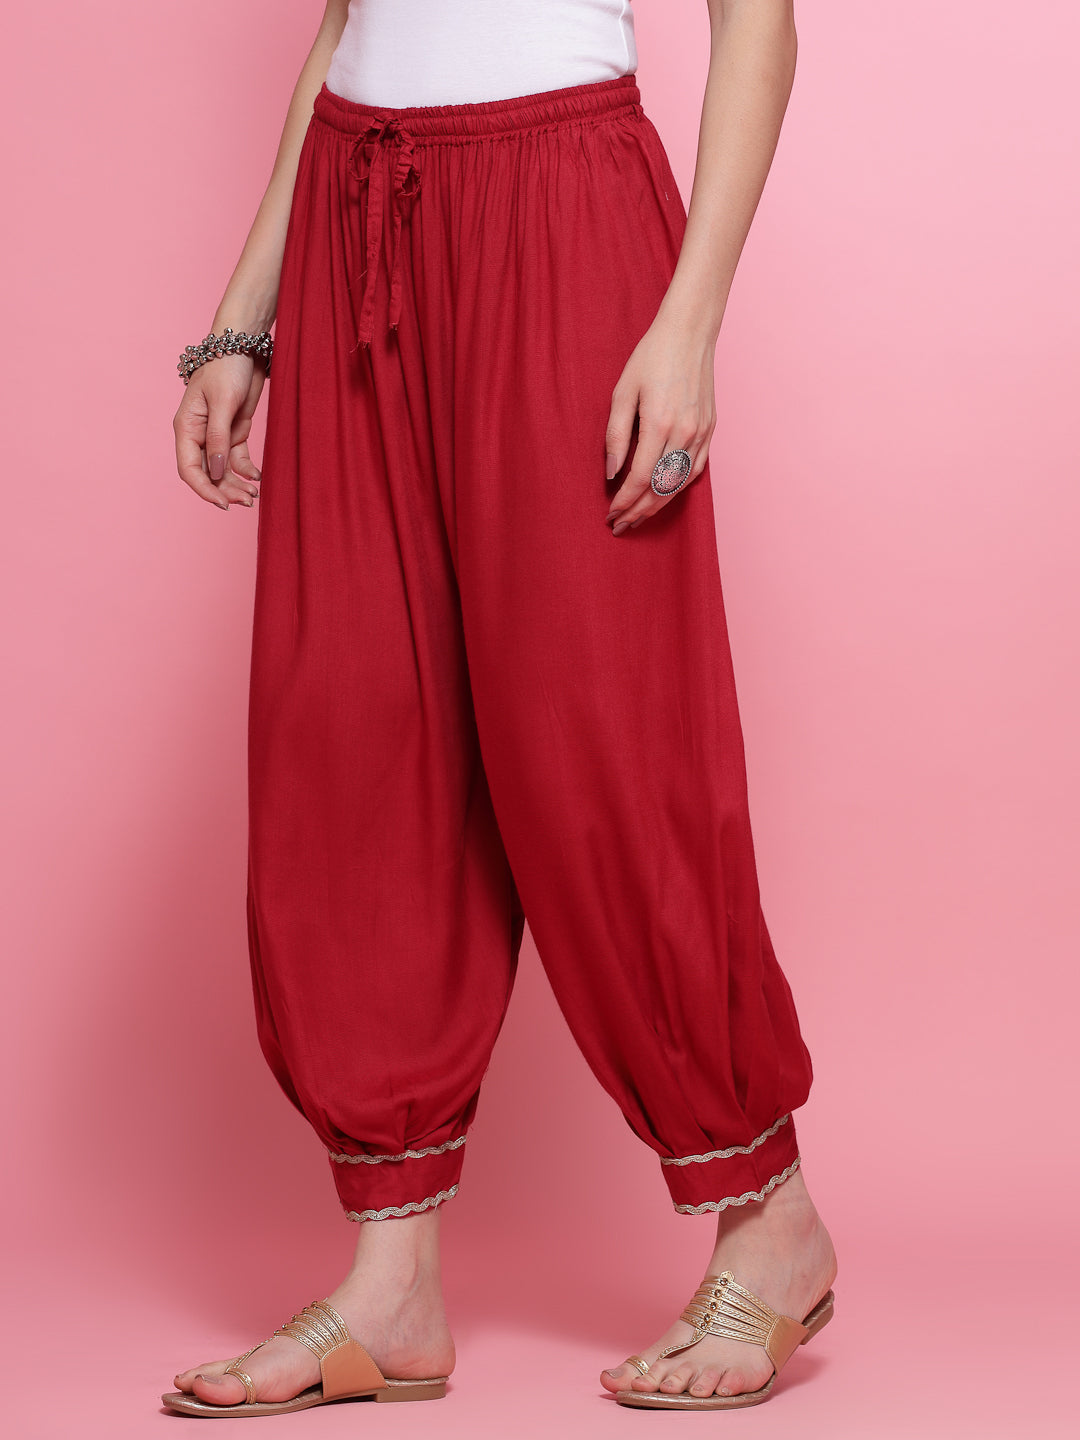 Tie dye Cotton Harem Pants Baggy Afghani Gypsy Hippie Unisex Trouser Yoga  Loose Harem Pants at Rs 250/piece | हैरम पैंट्स in Jaipur | ID: 9235917473